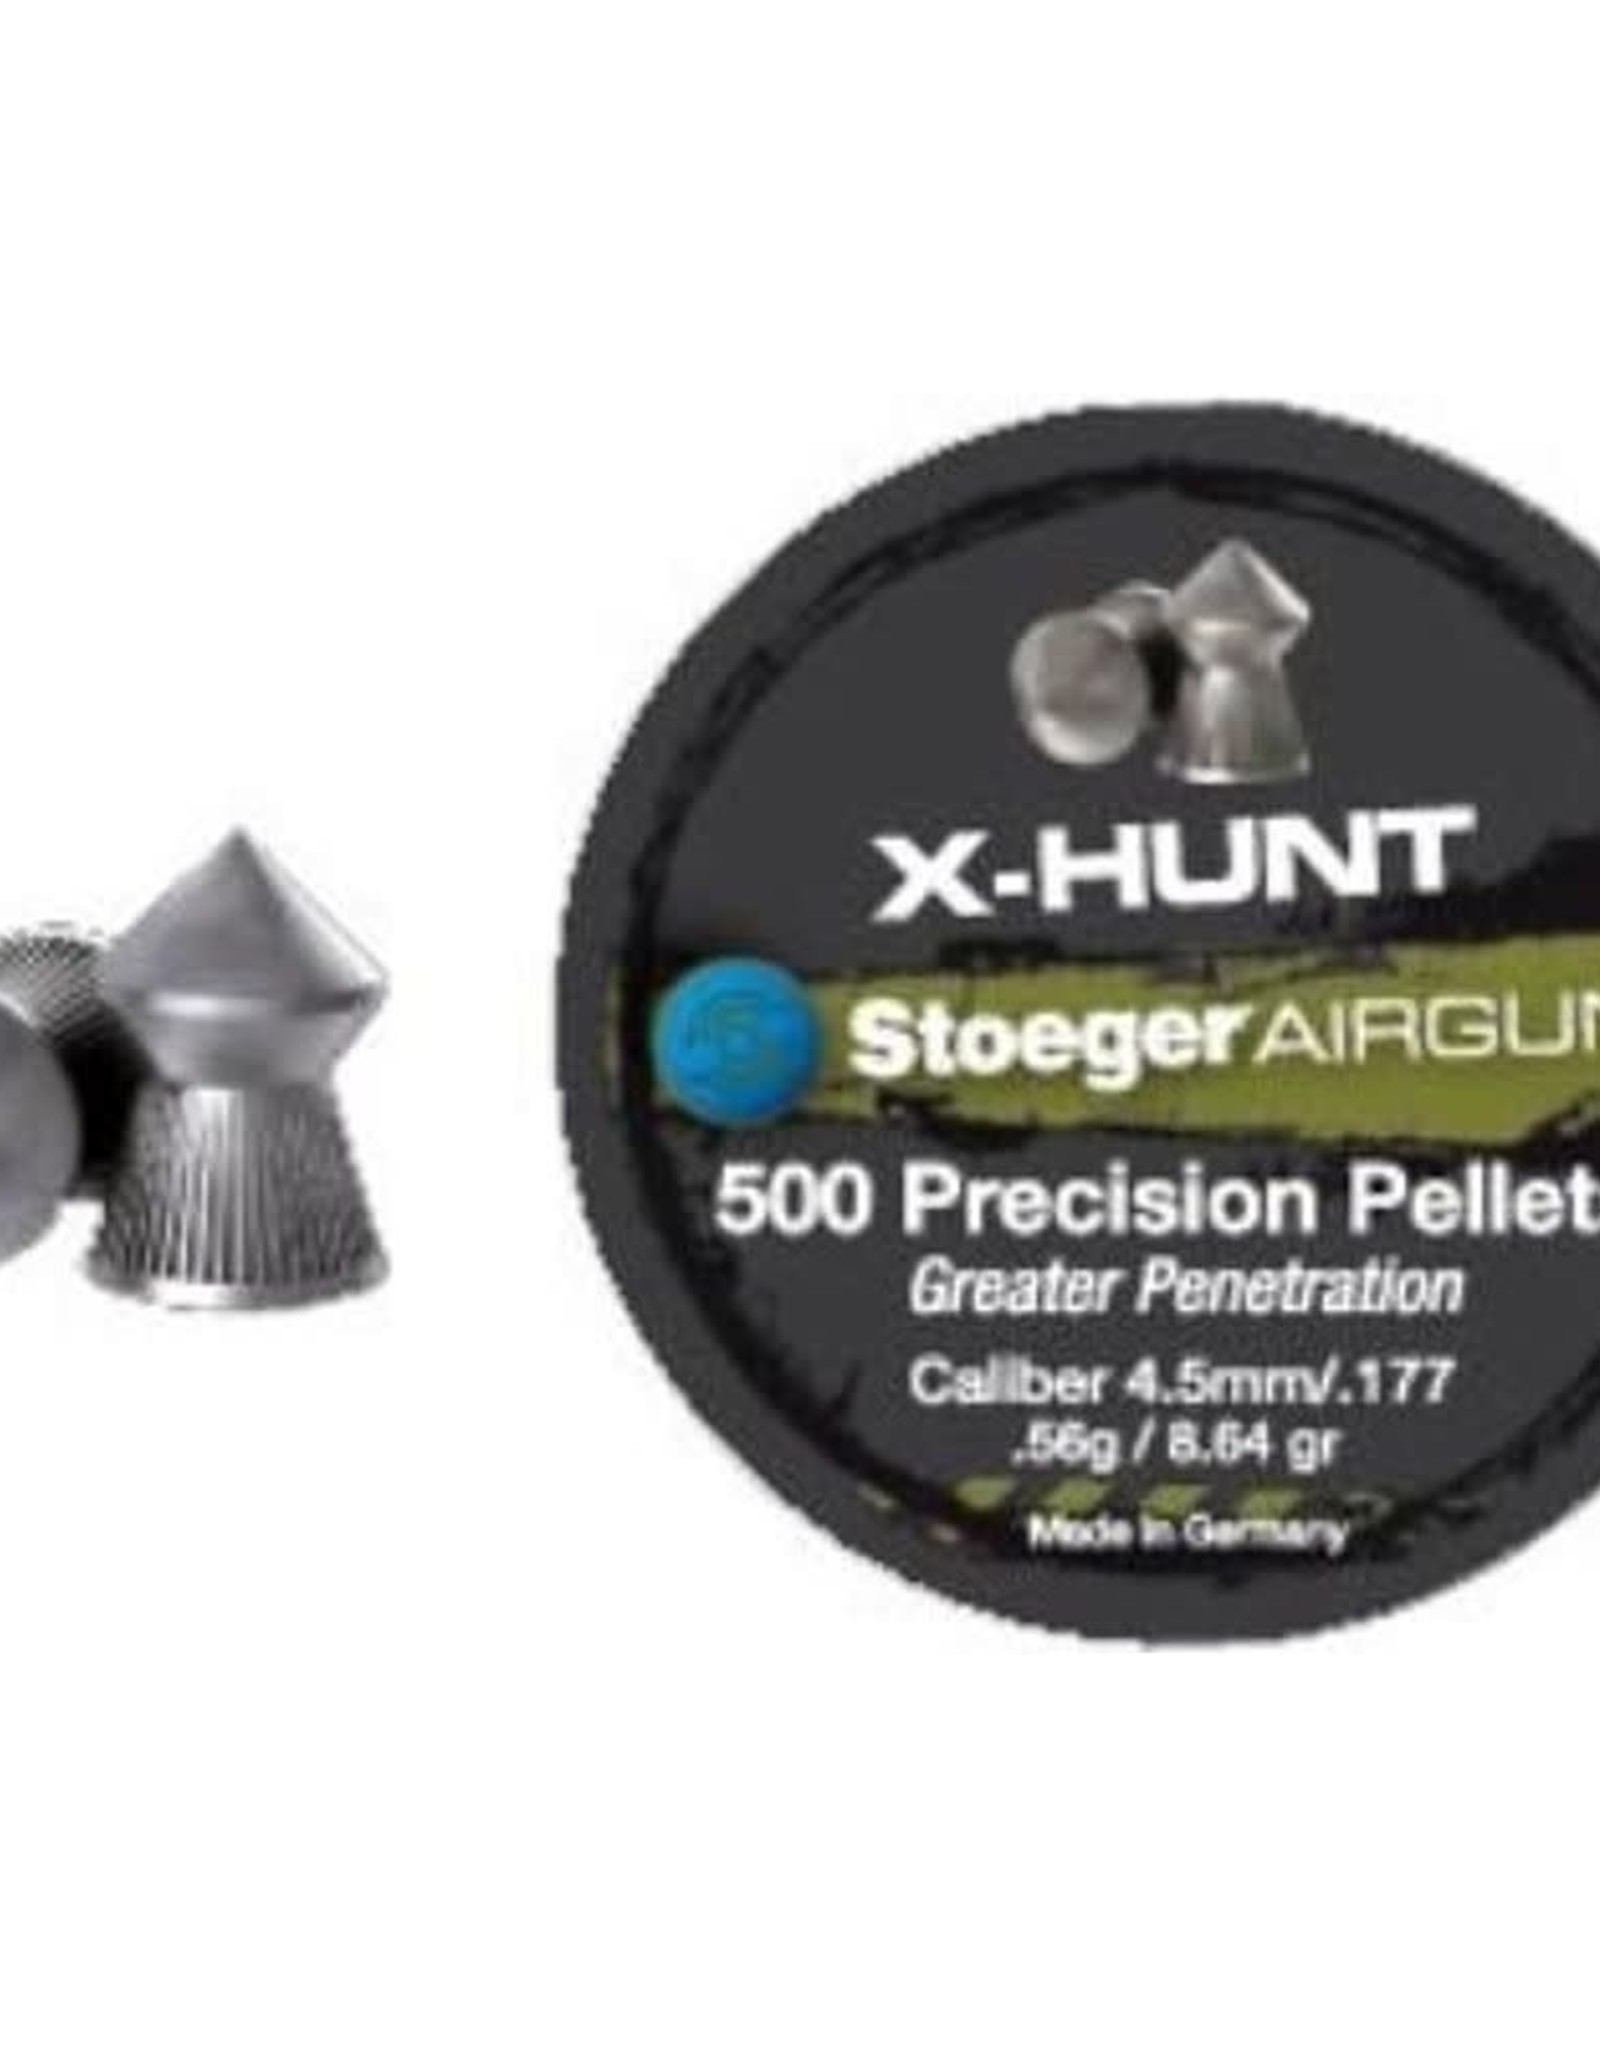 Stoeger X-Hunt .177 Pellets 500